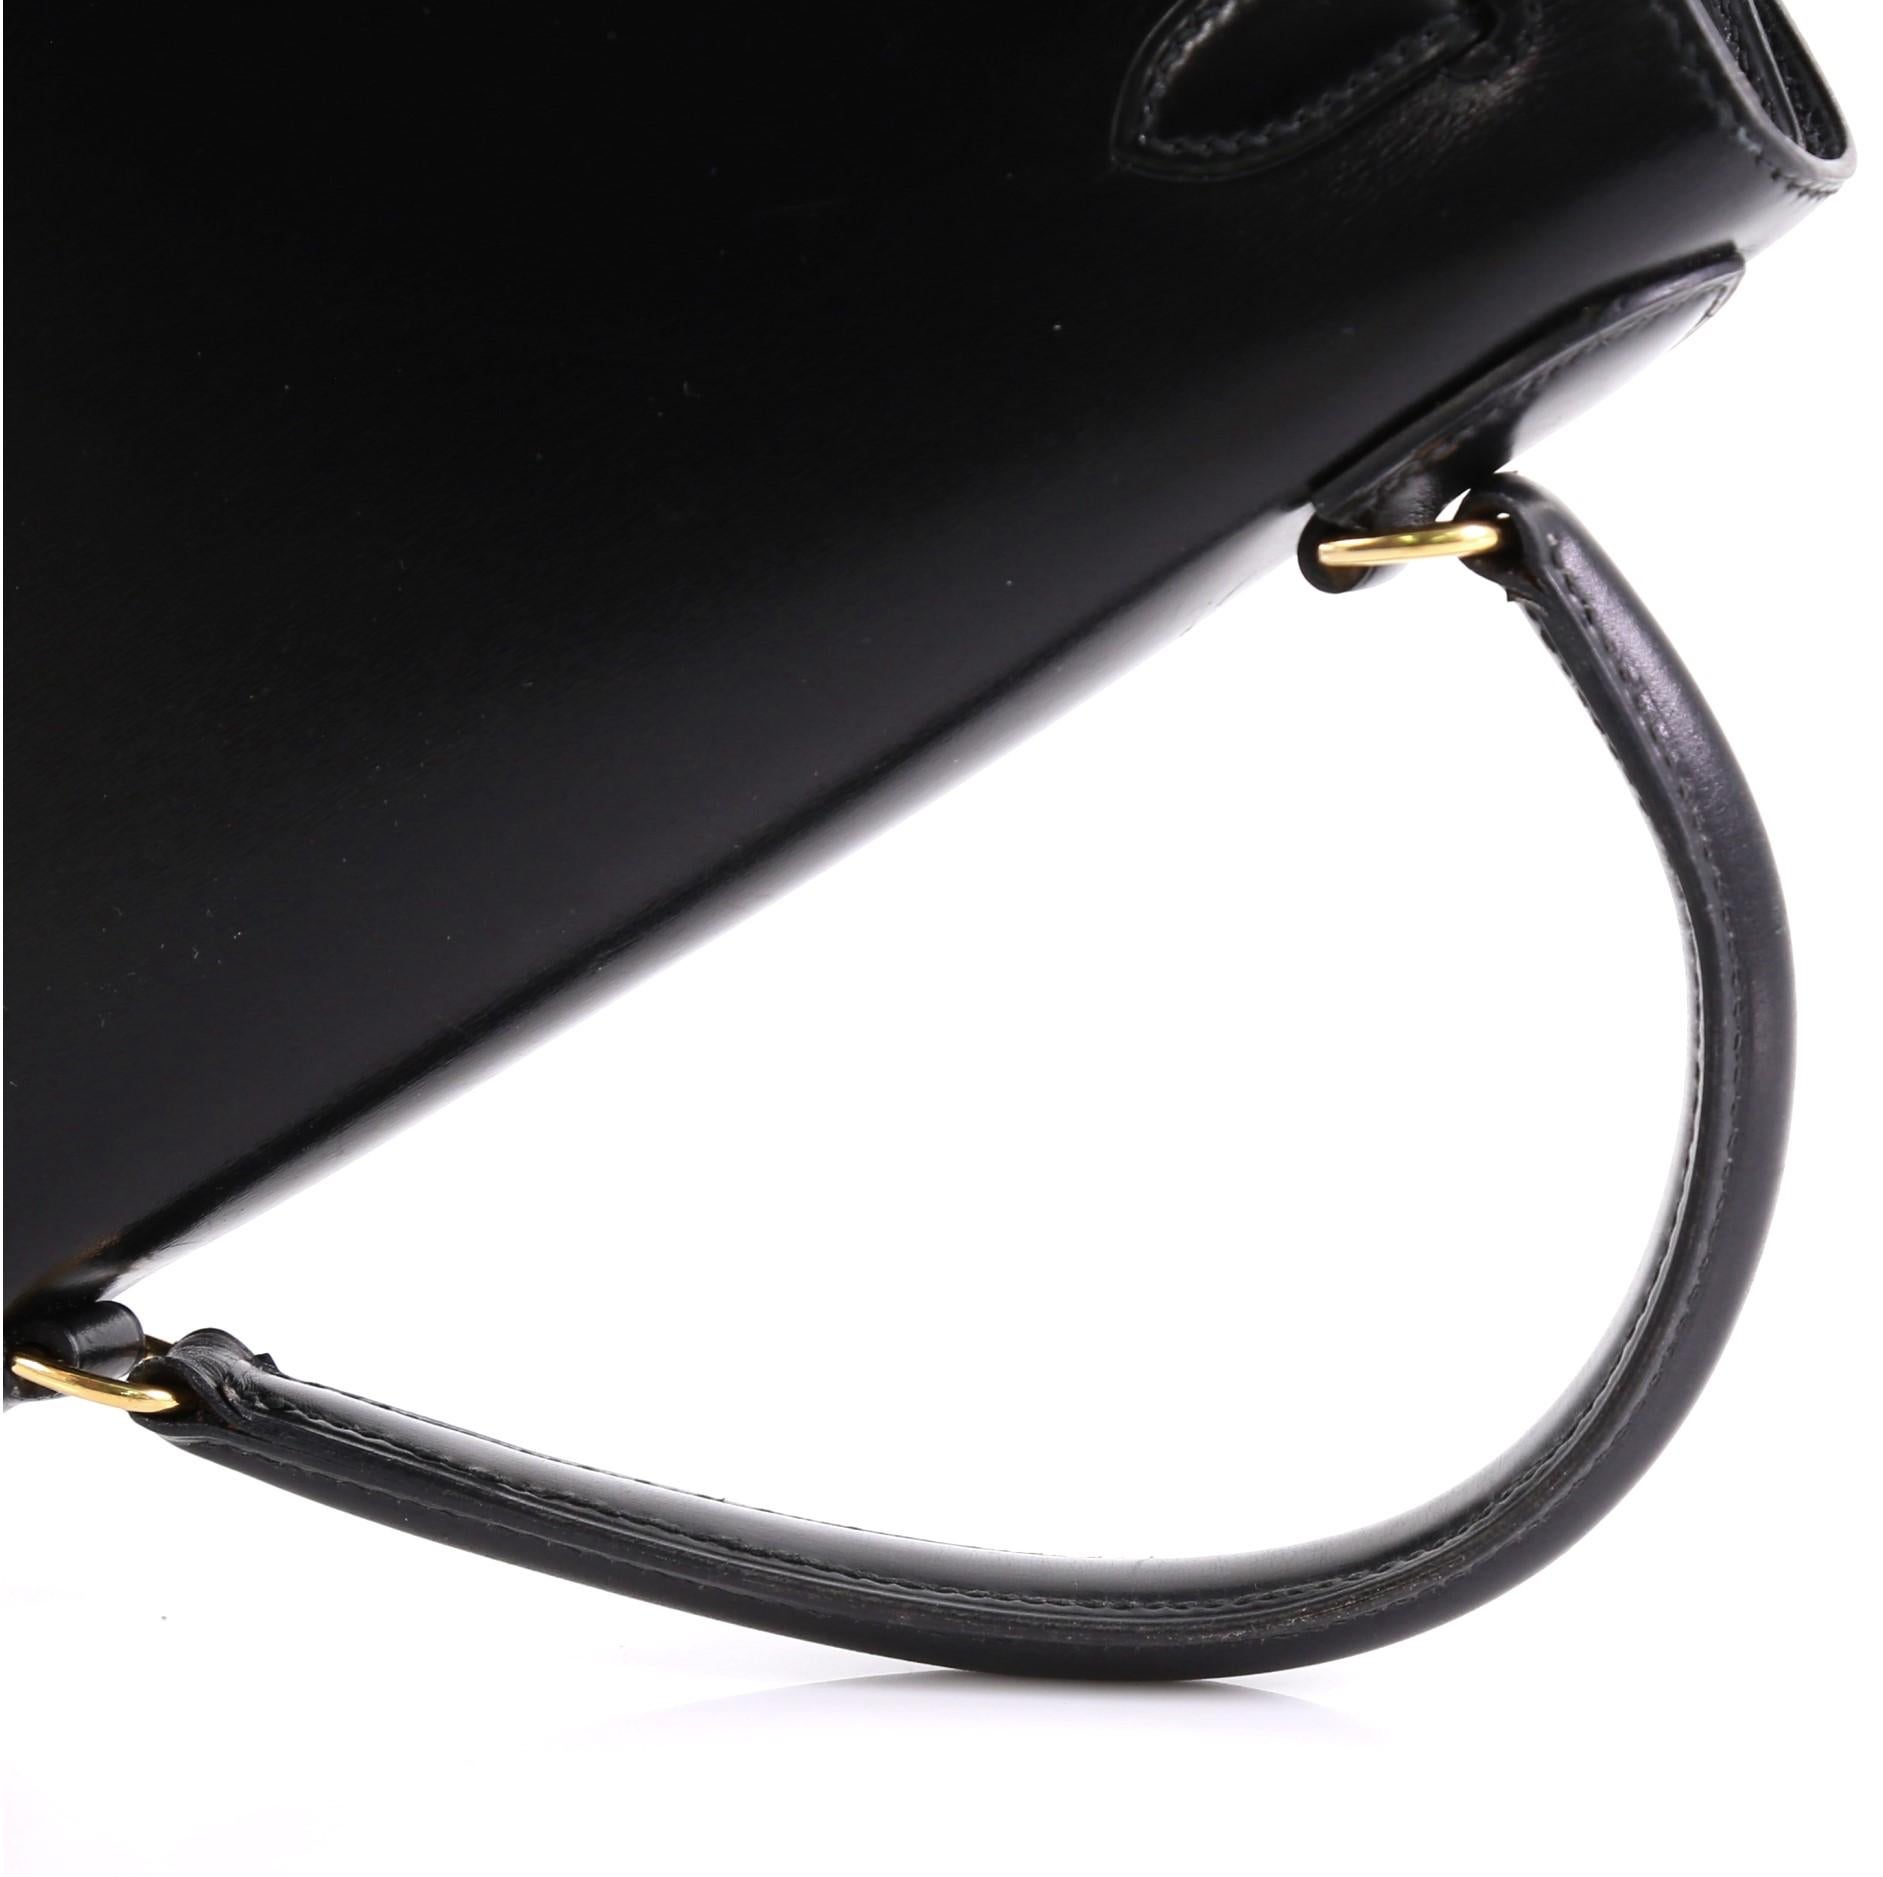 Hermes Kelly Handbag Noir Box Calf with Gold Hardware 28 2